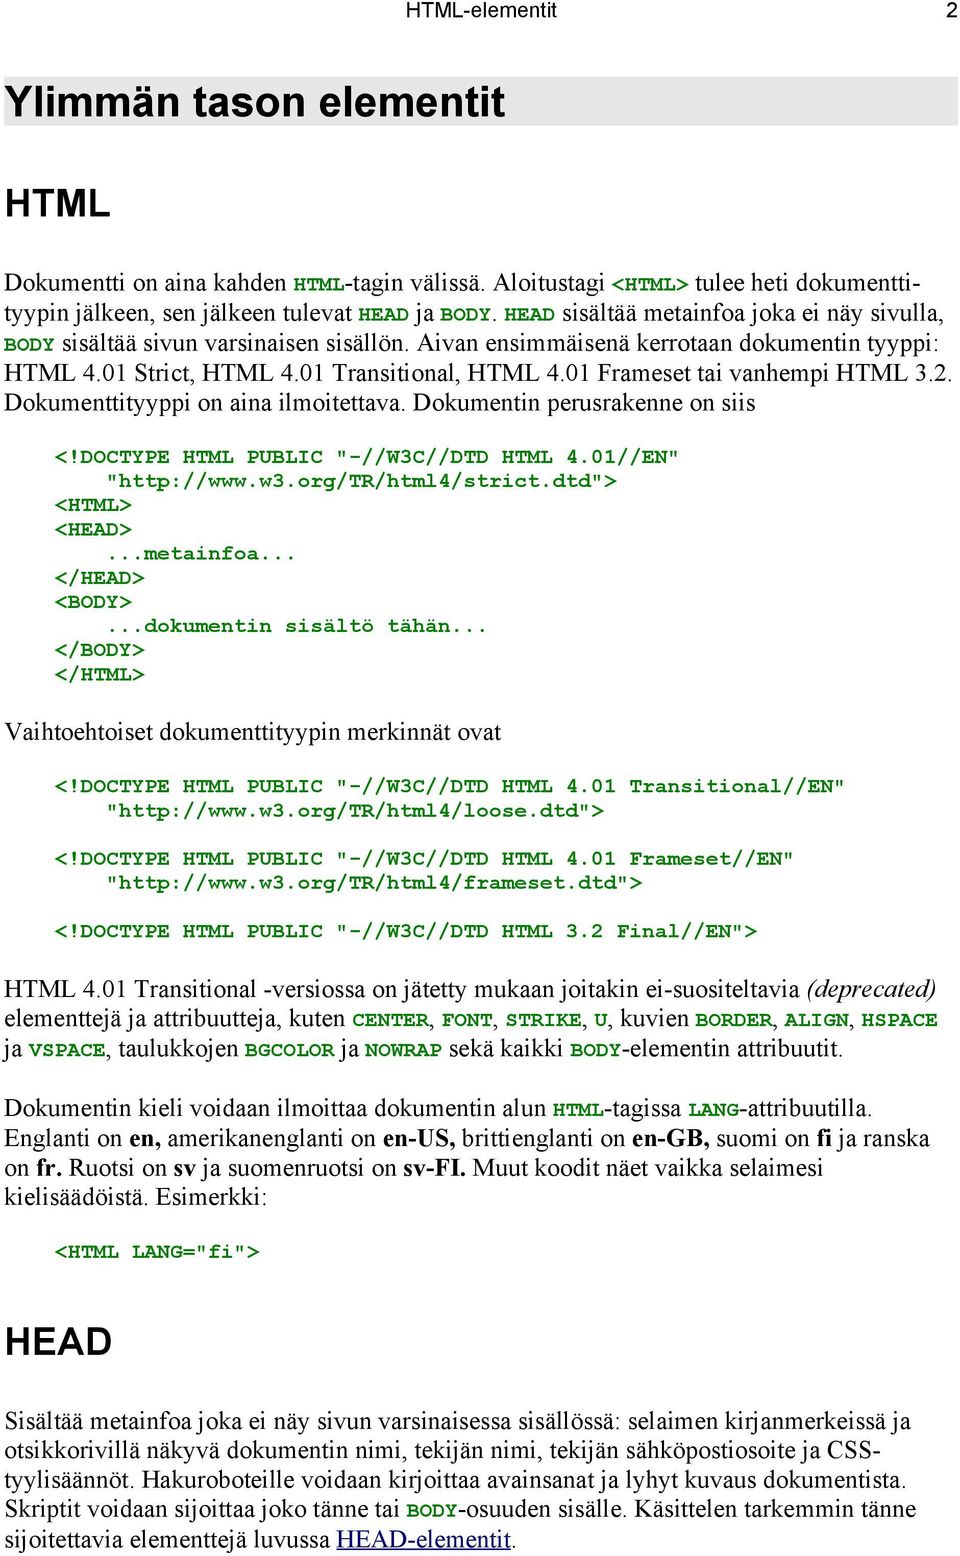 01 Frameset tai vanhempi HTML 3.2. Dokumenttityyppi on aina ilmoitettava. Dokumentin perusrakenne on siis <!DOCTYPE HTML PUBLIC "-//W3C//DTD HTML 4.01//EN" "http://www.w3.org/tr/html4/strict.